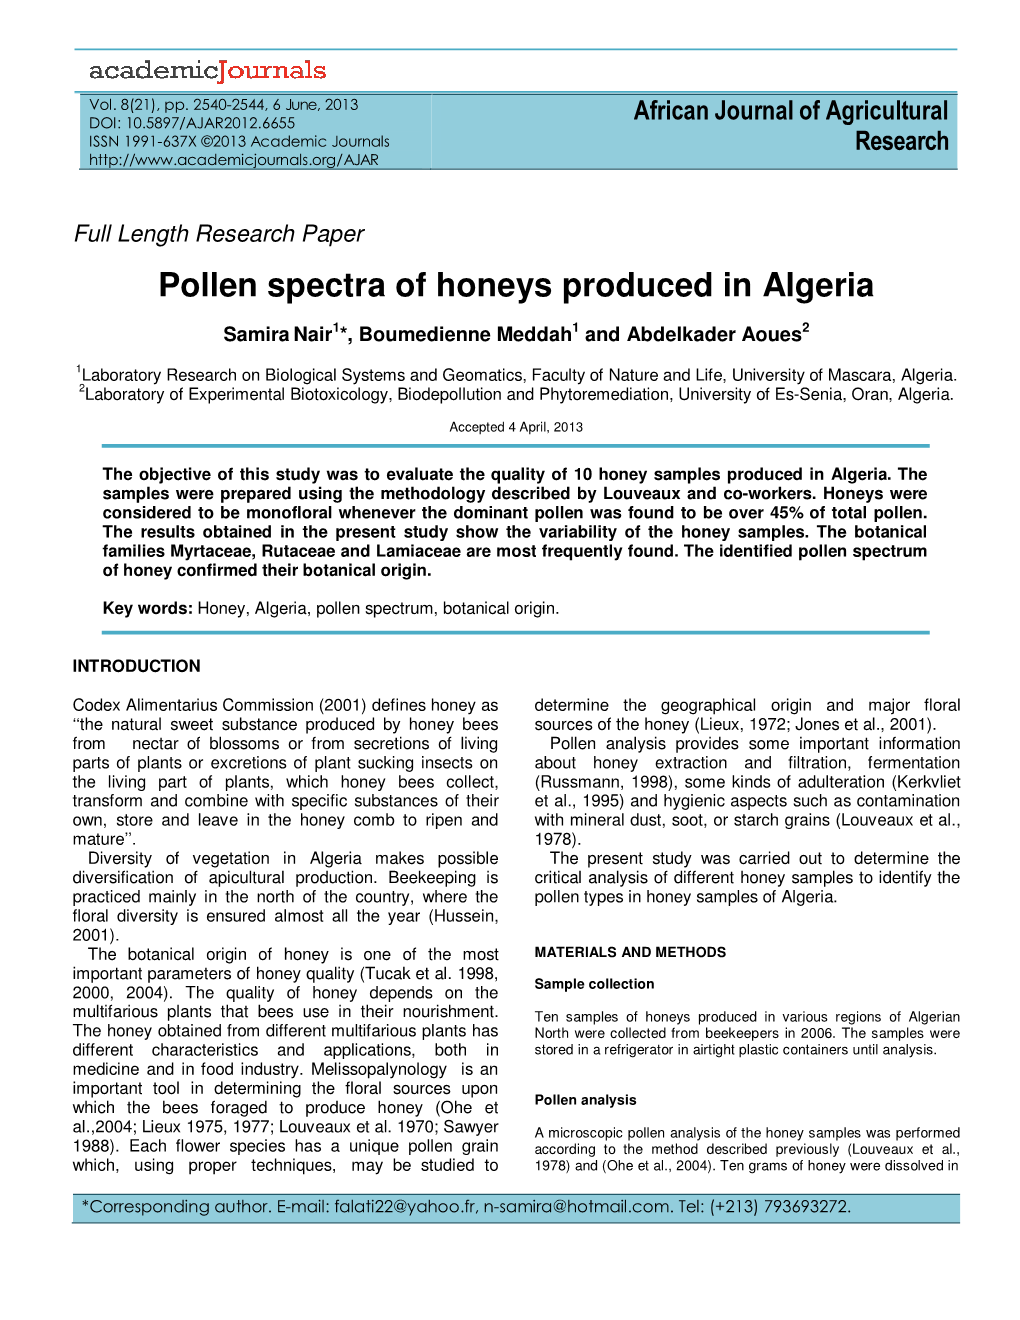 Pollen Spectra of Honeys Produced in Algeria